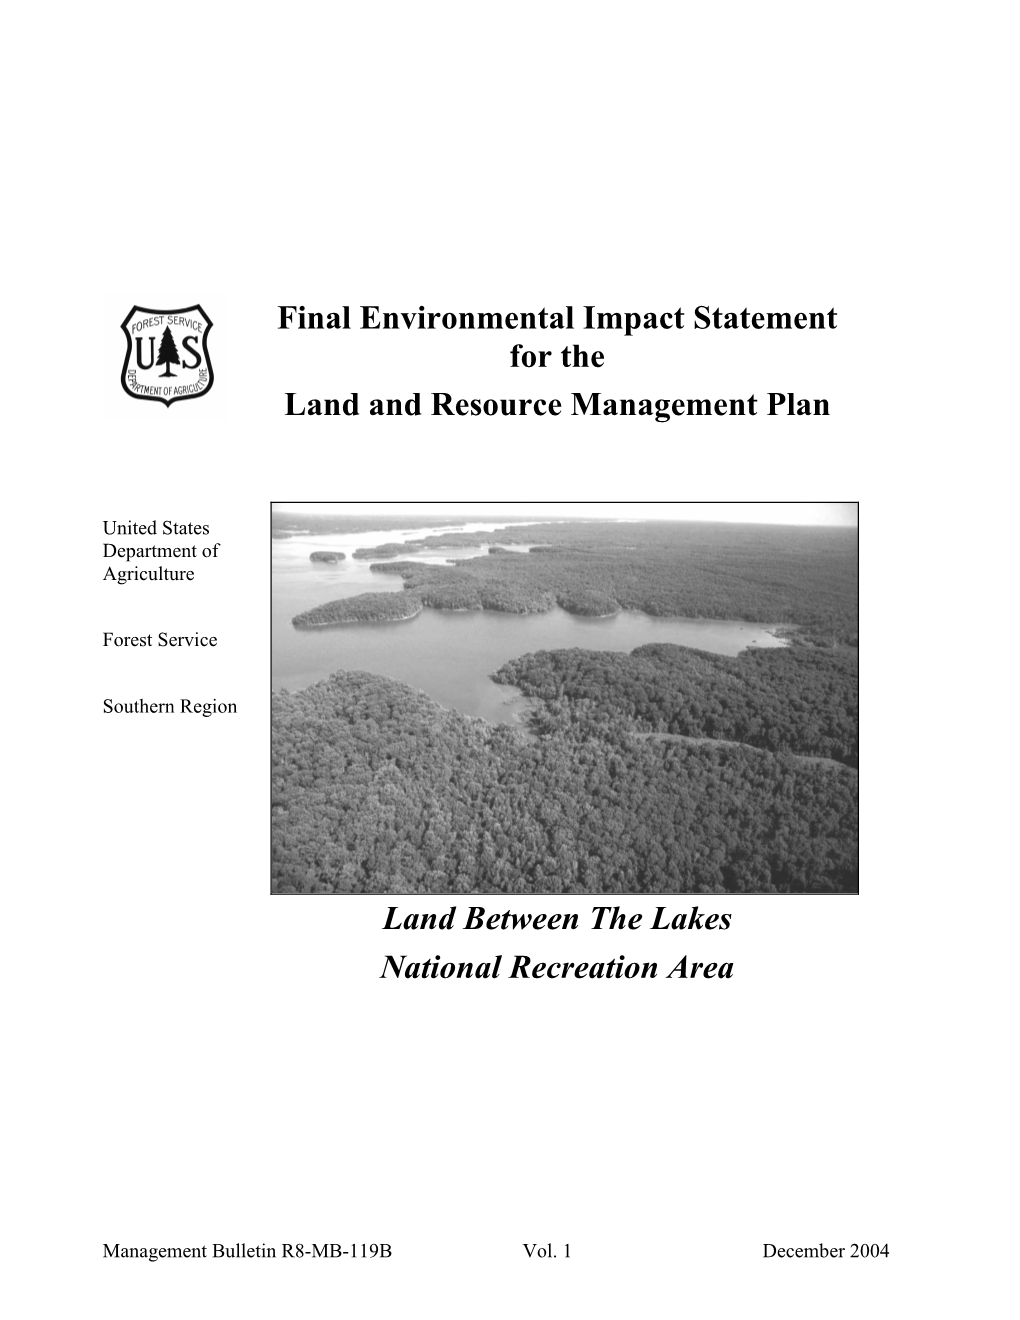 Final Environmental Impact Statement (FEIS)